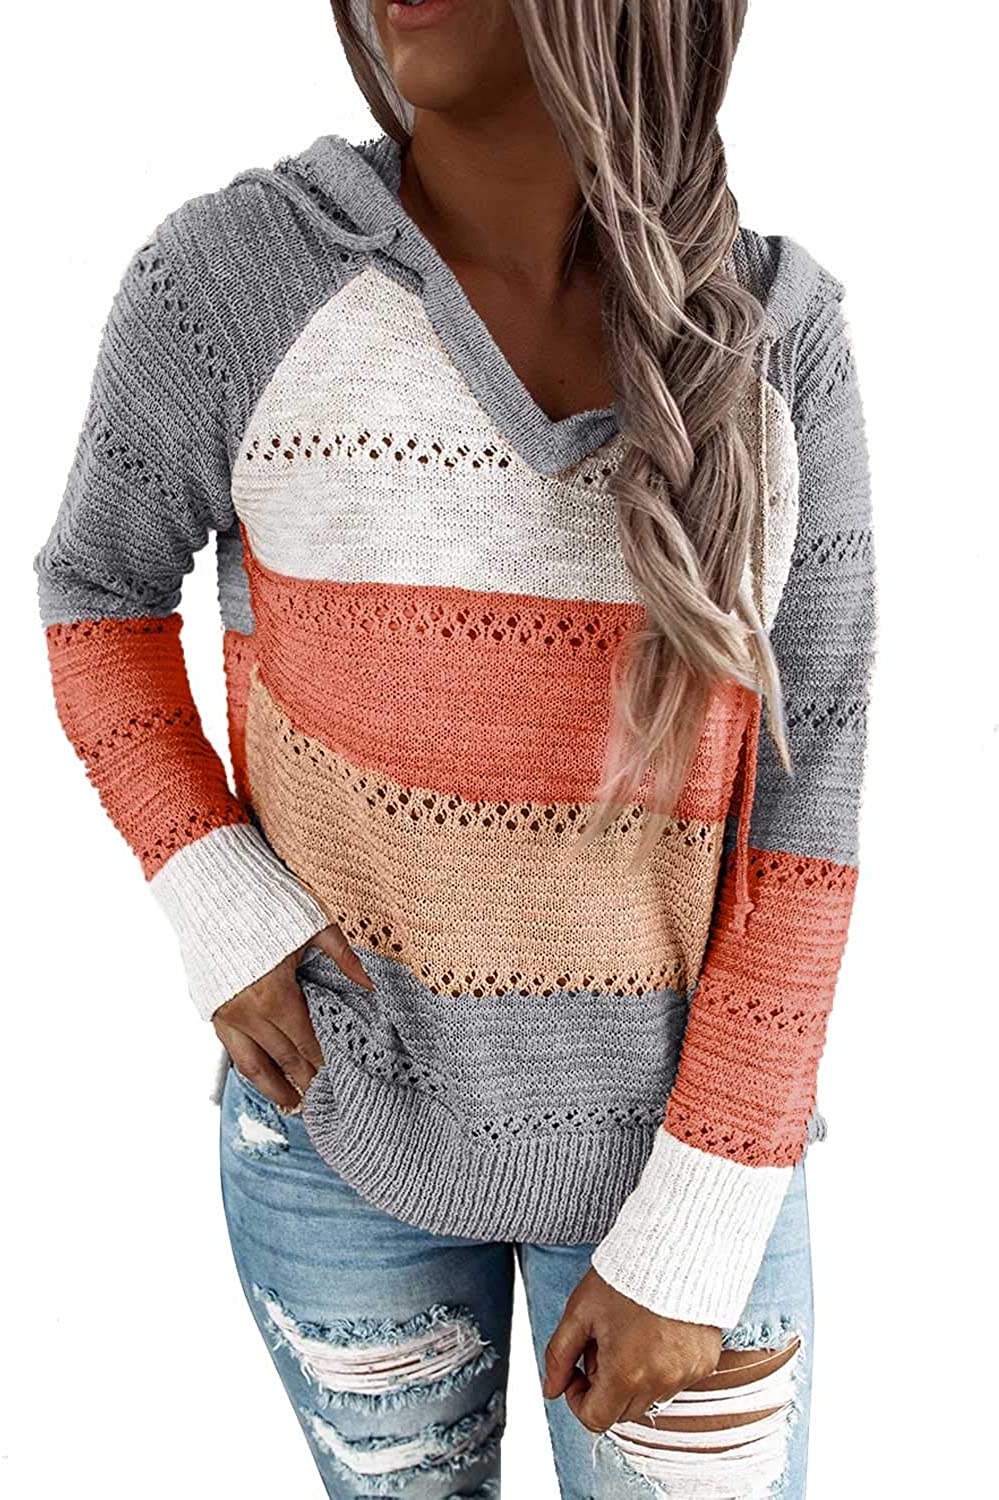 BLENCOT Women's Lightweight Color Block Hooded Sweaters Drawstring